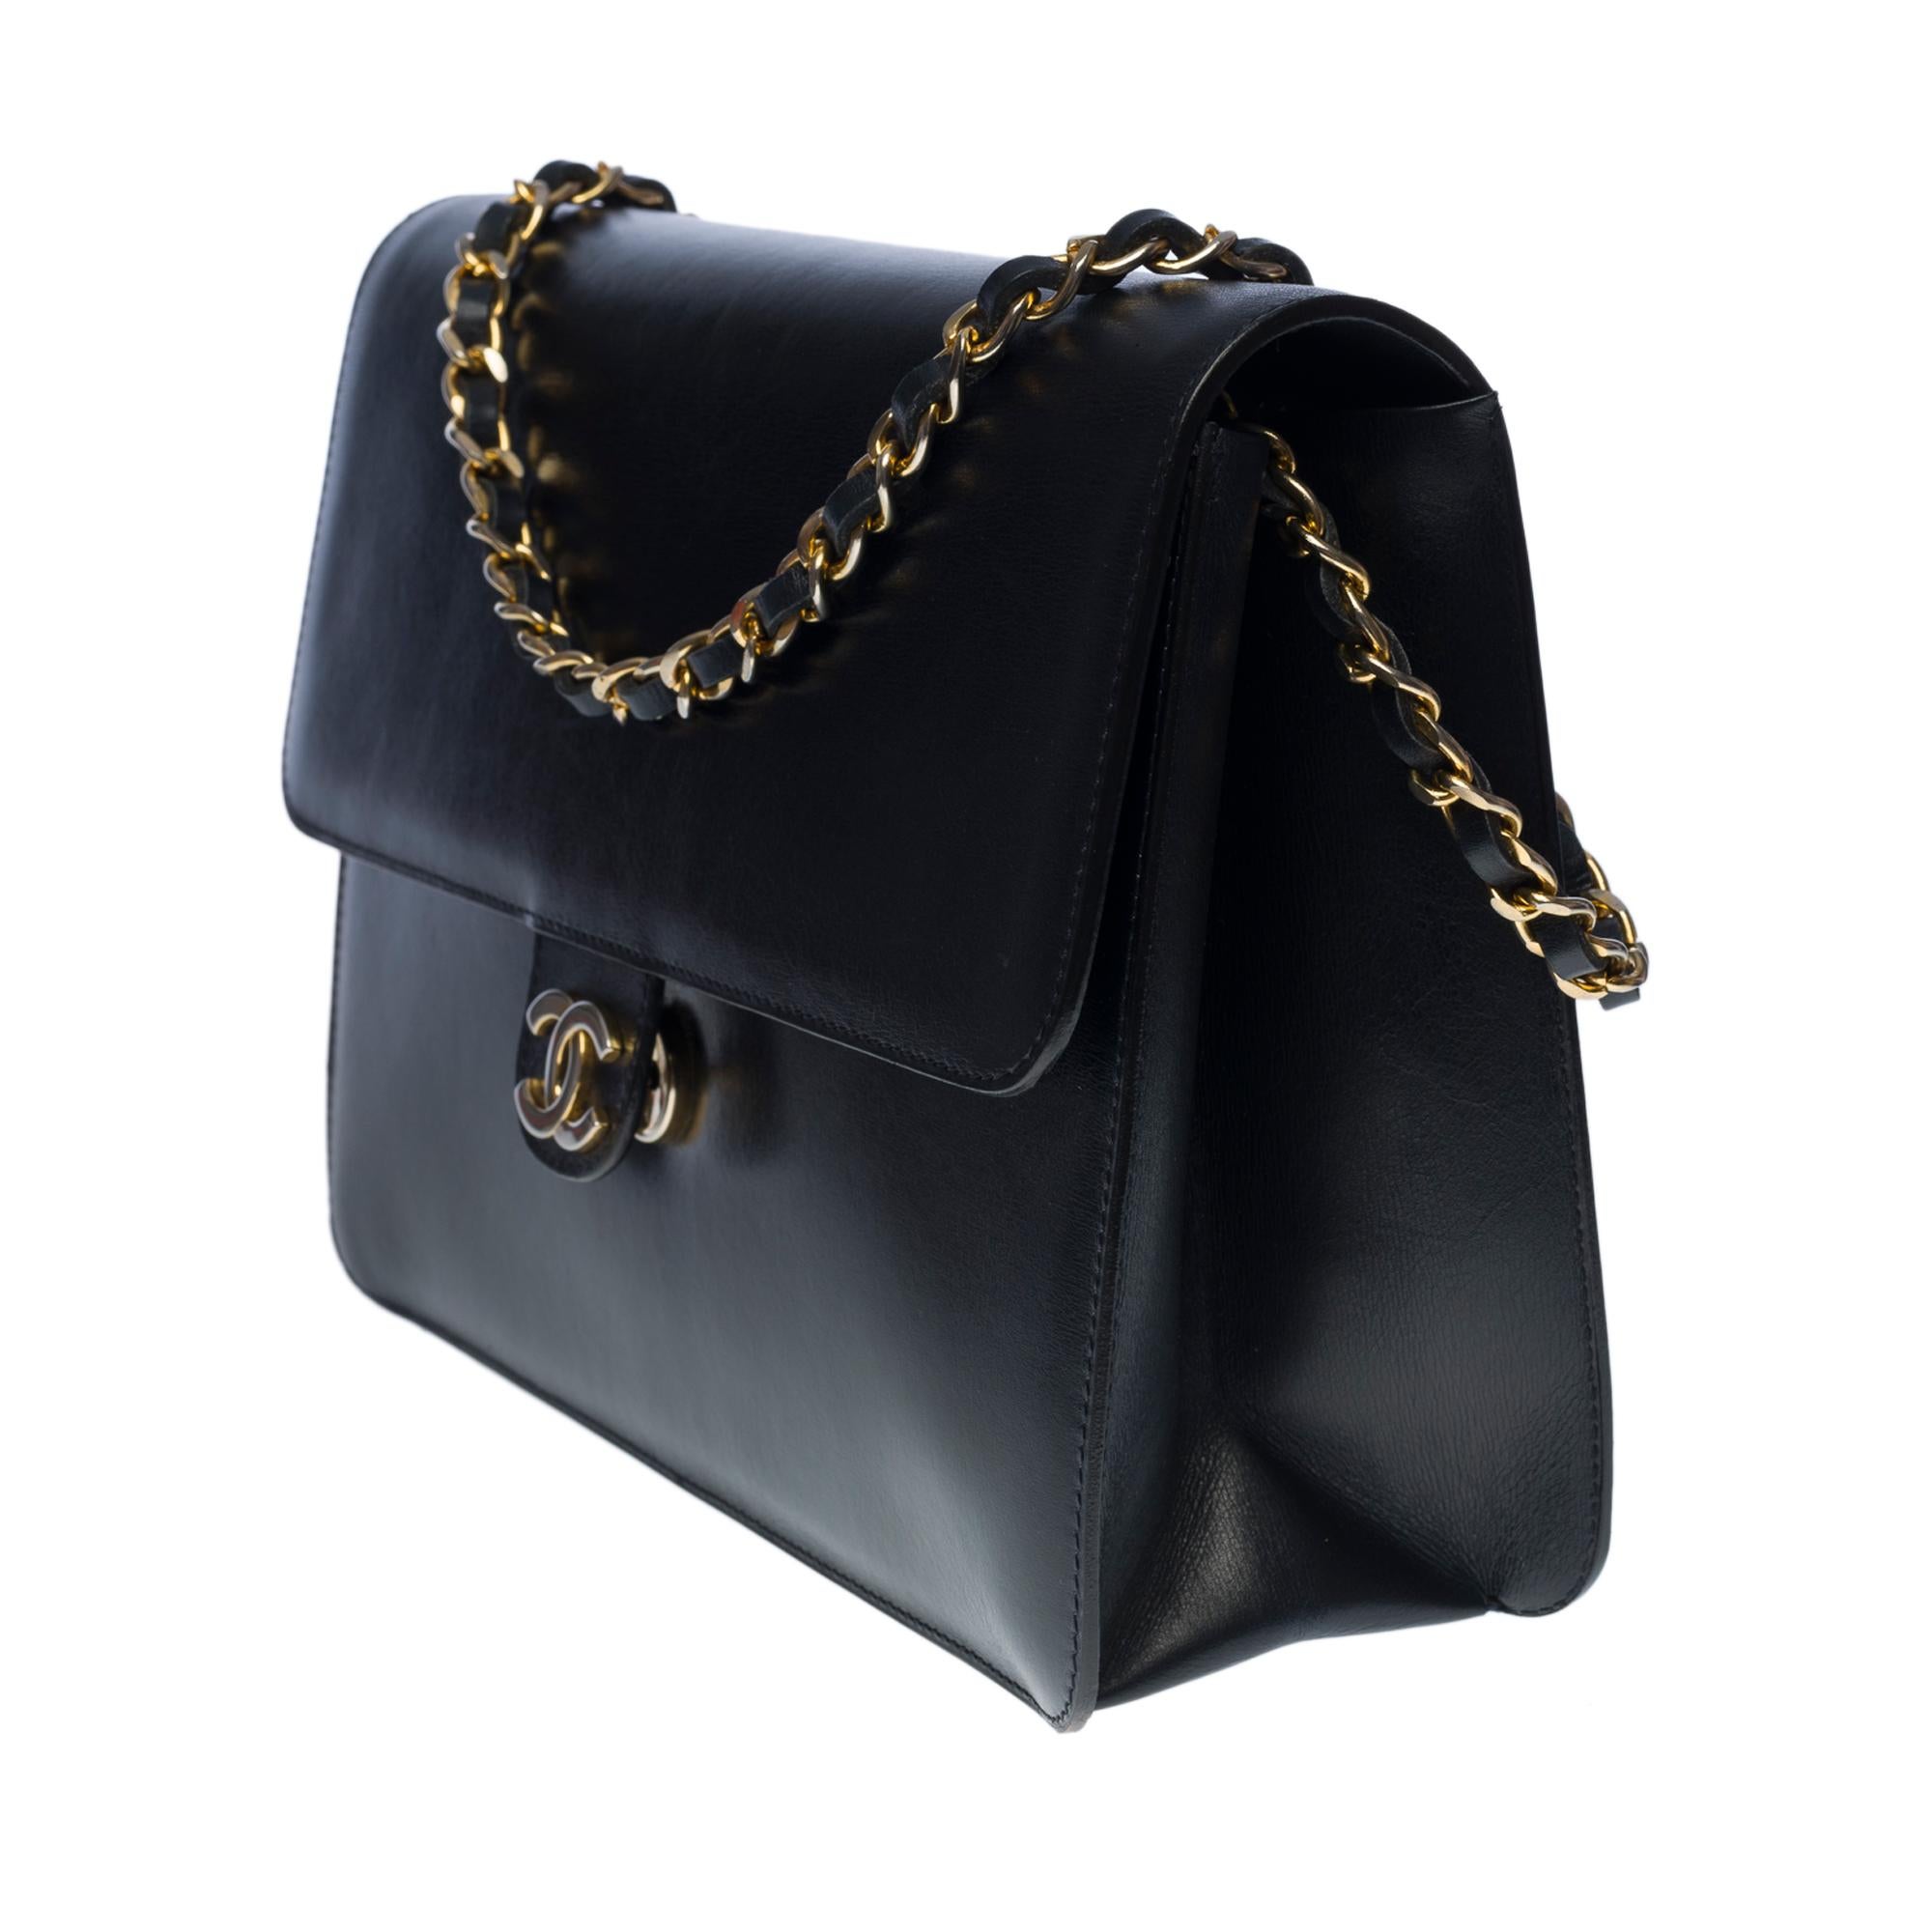 Black Rare Chanel Classic shoulder flap bag in Navy blue box calfskin, GHW